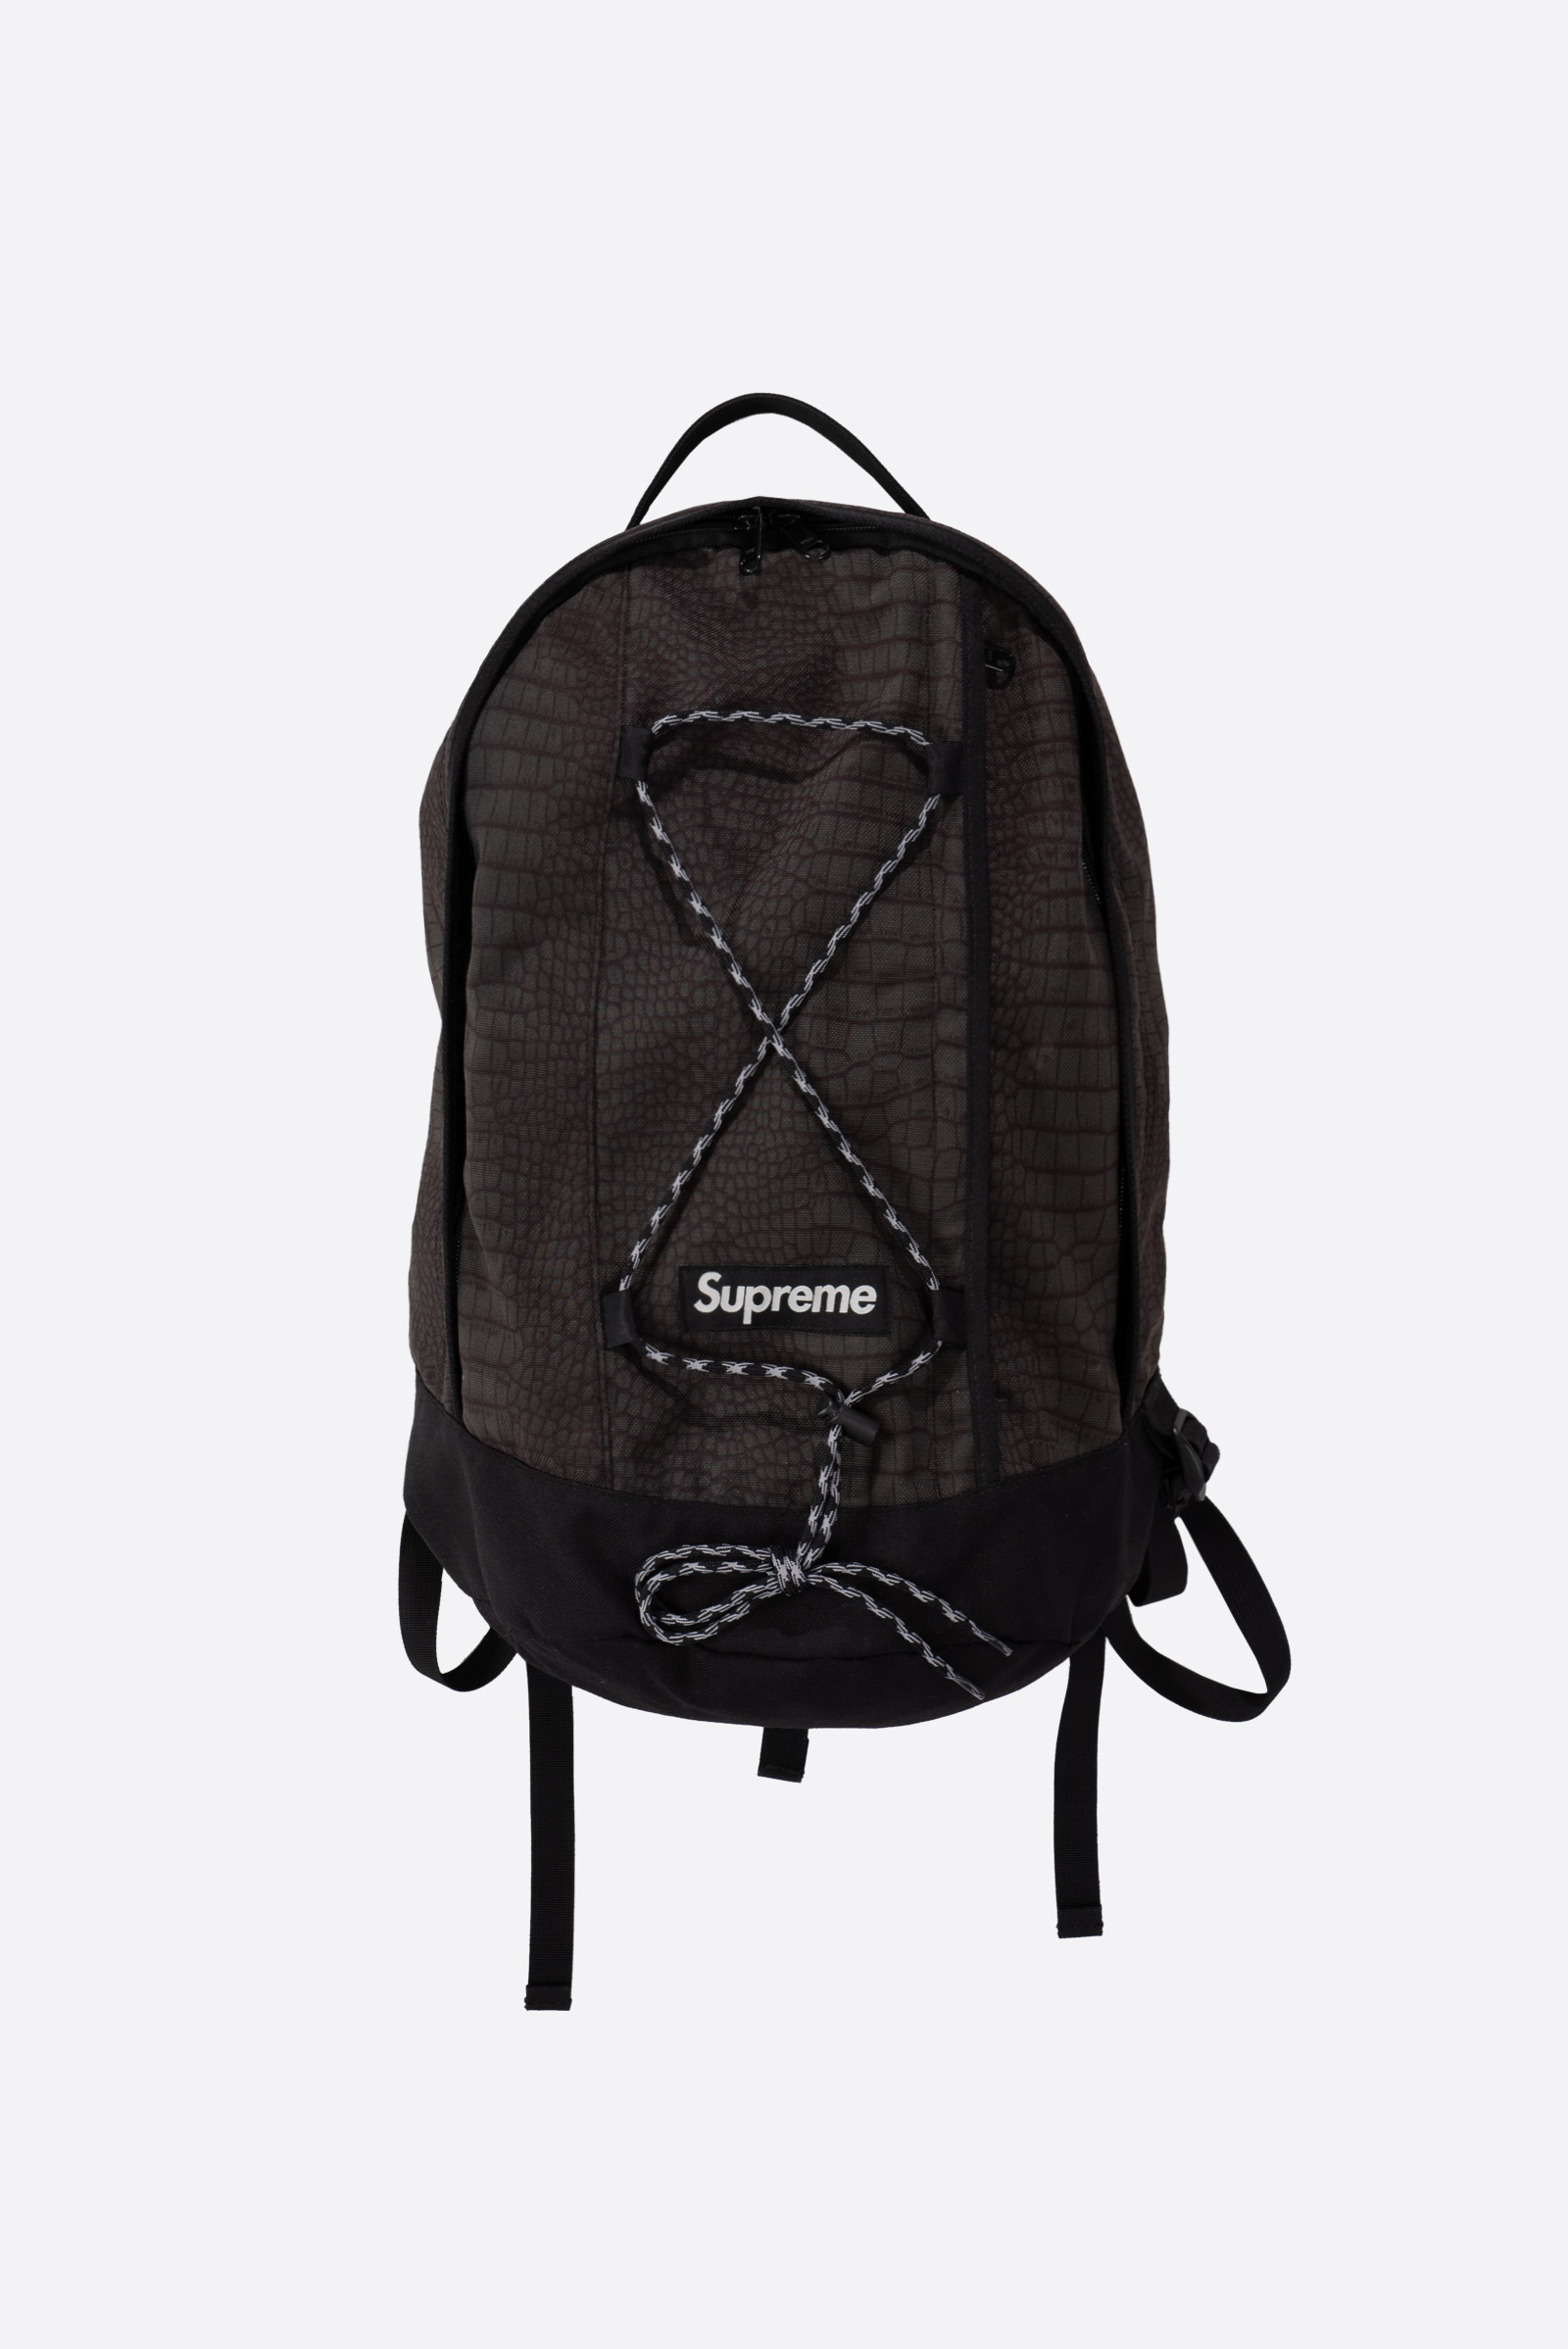 SUPREME 13ss CROC Backpack : 월드피스 다이어트